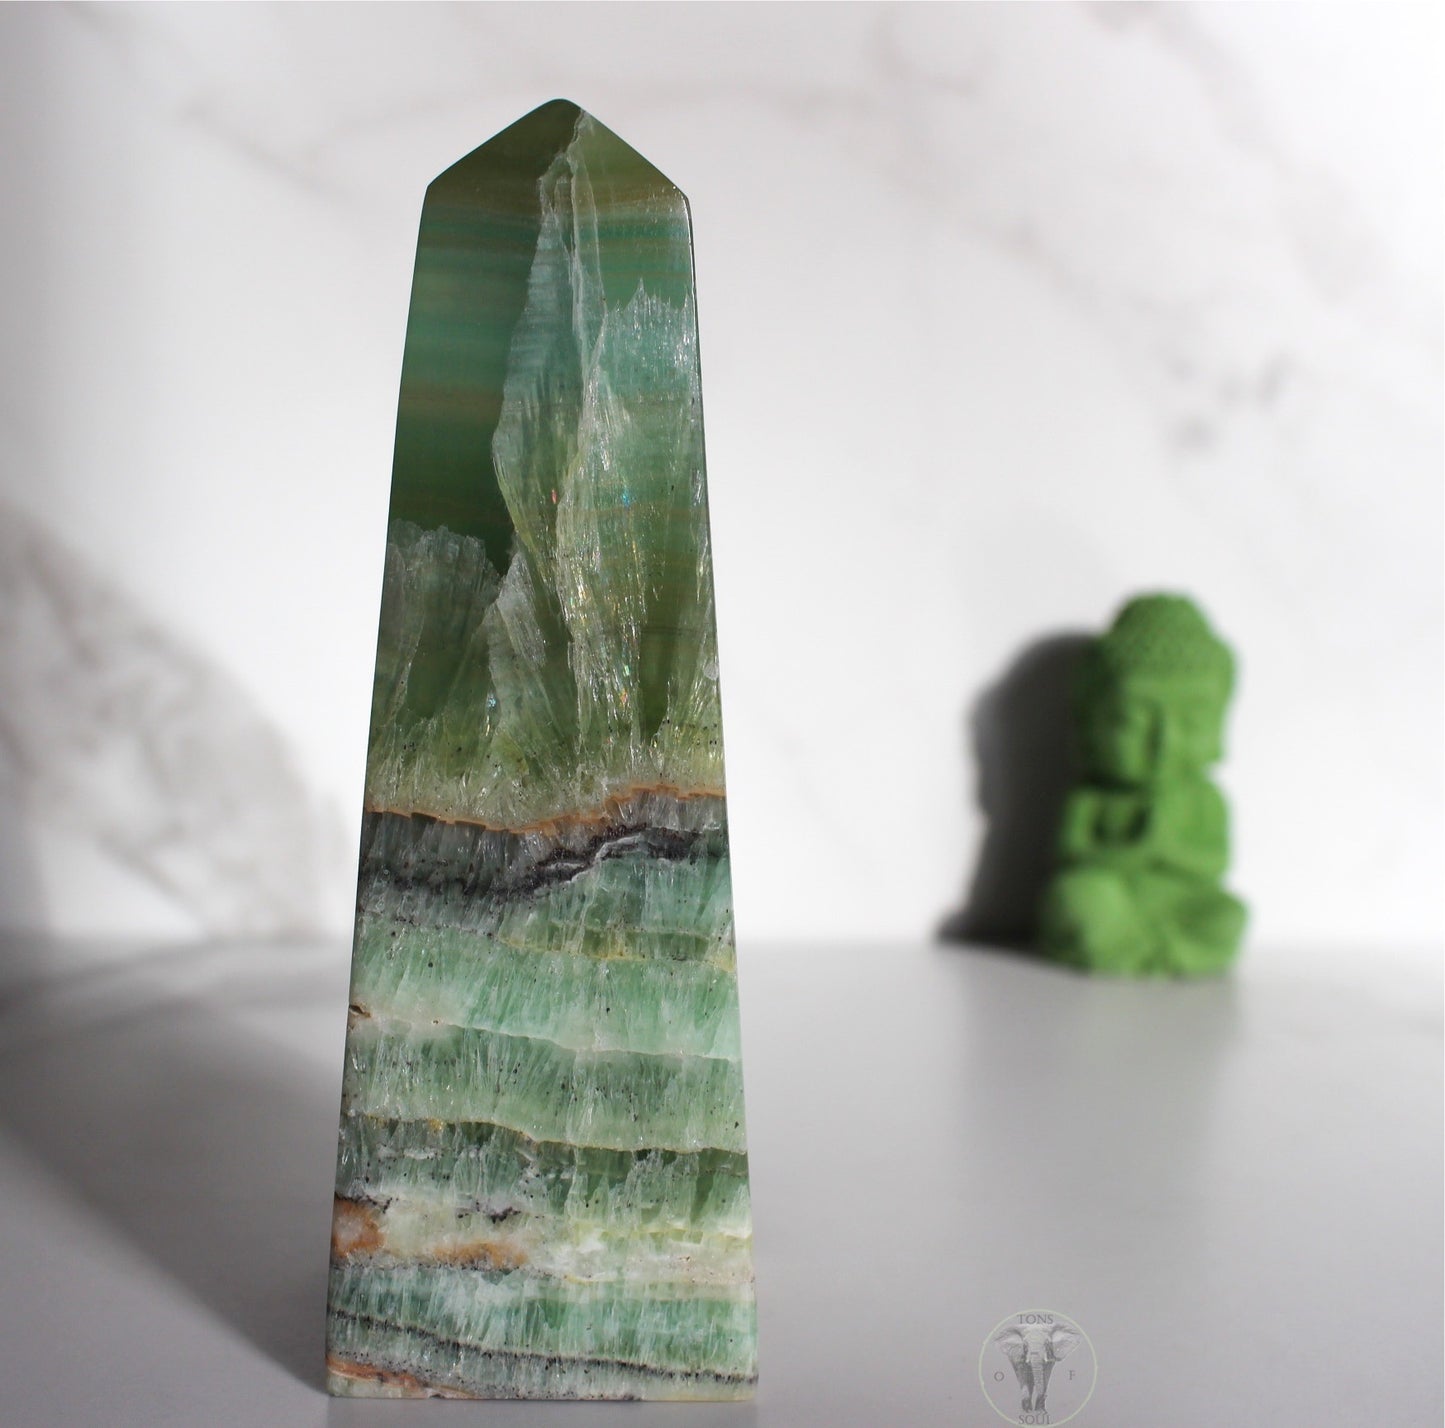 Green “Kiwi” Calcite Obelisk Tower| A